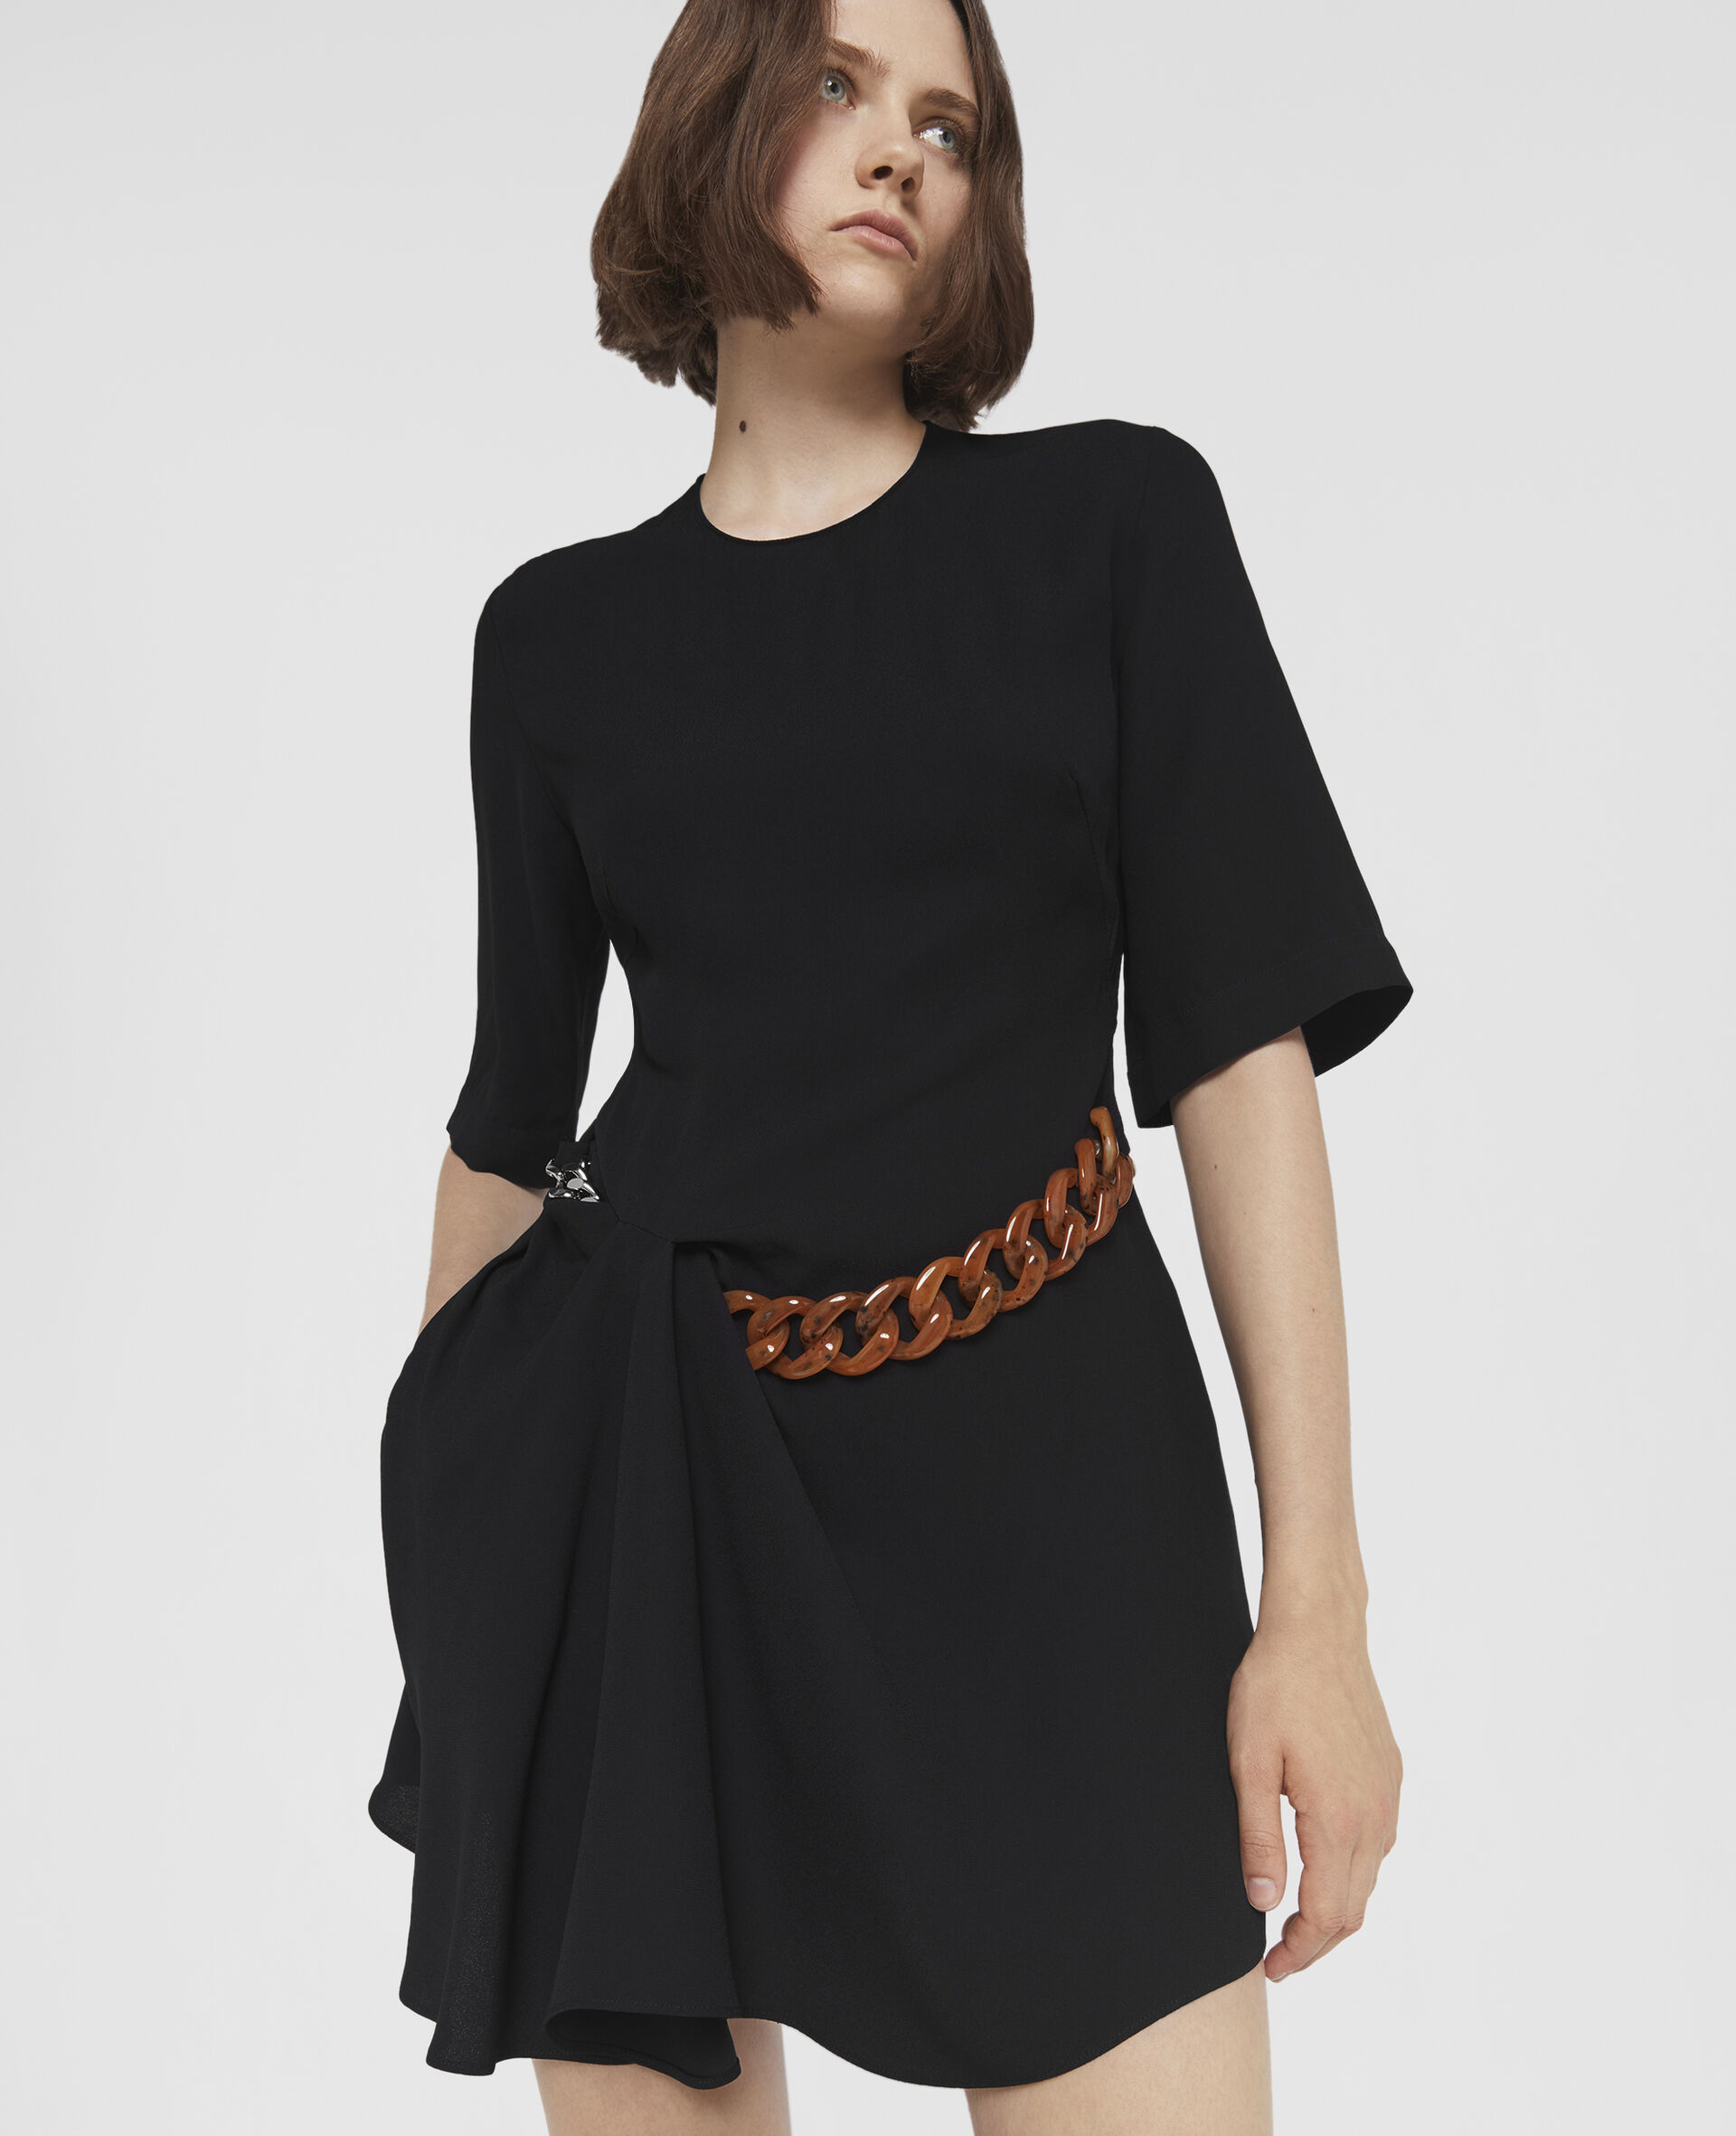 Falabella Chain Dress-Black-large image number 3